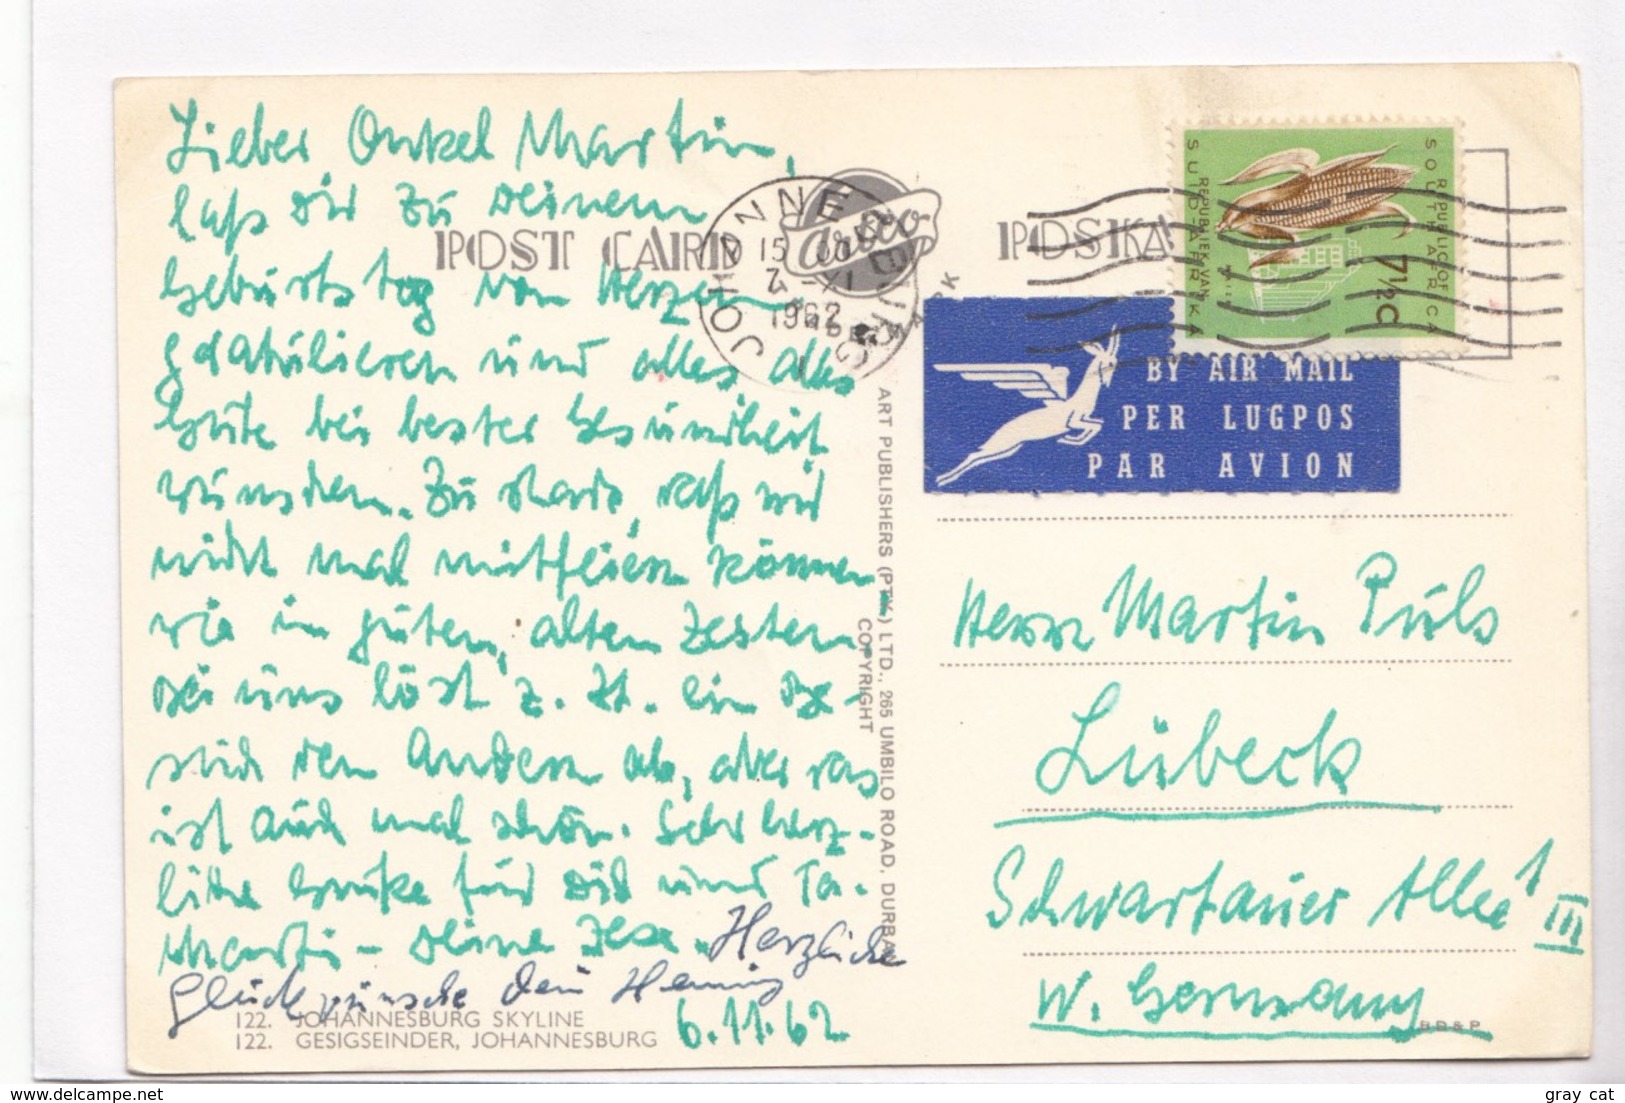 JOHANNESBURG, Skyline , South Africa, 1962 Used Postcard [22361] - South Africa